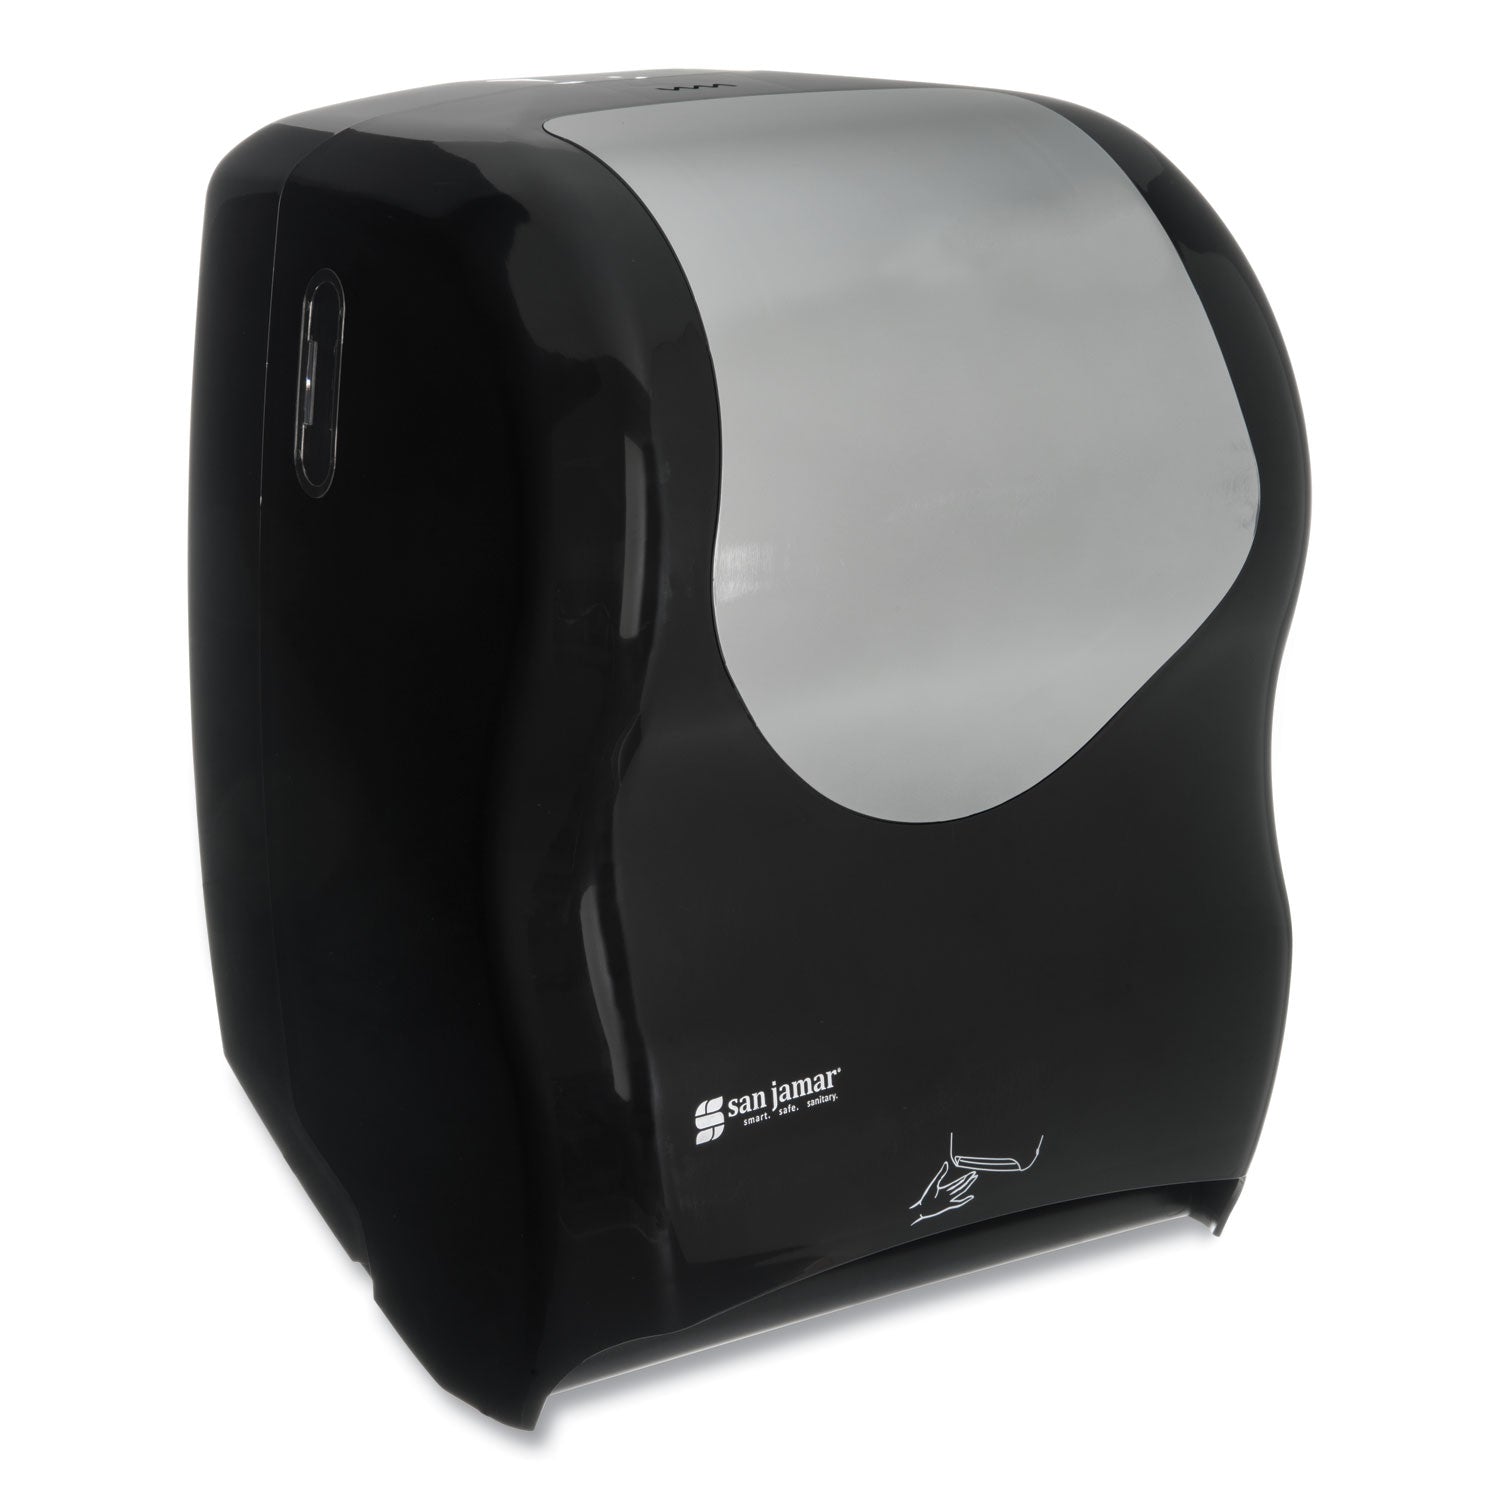 smart-system-with-iq-sensor-towel-dispenser-165-x-975-x-12-black-silver_sjmt1470bkss - 2